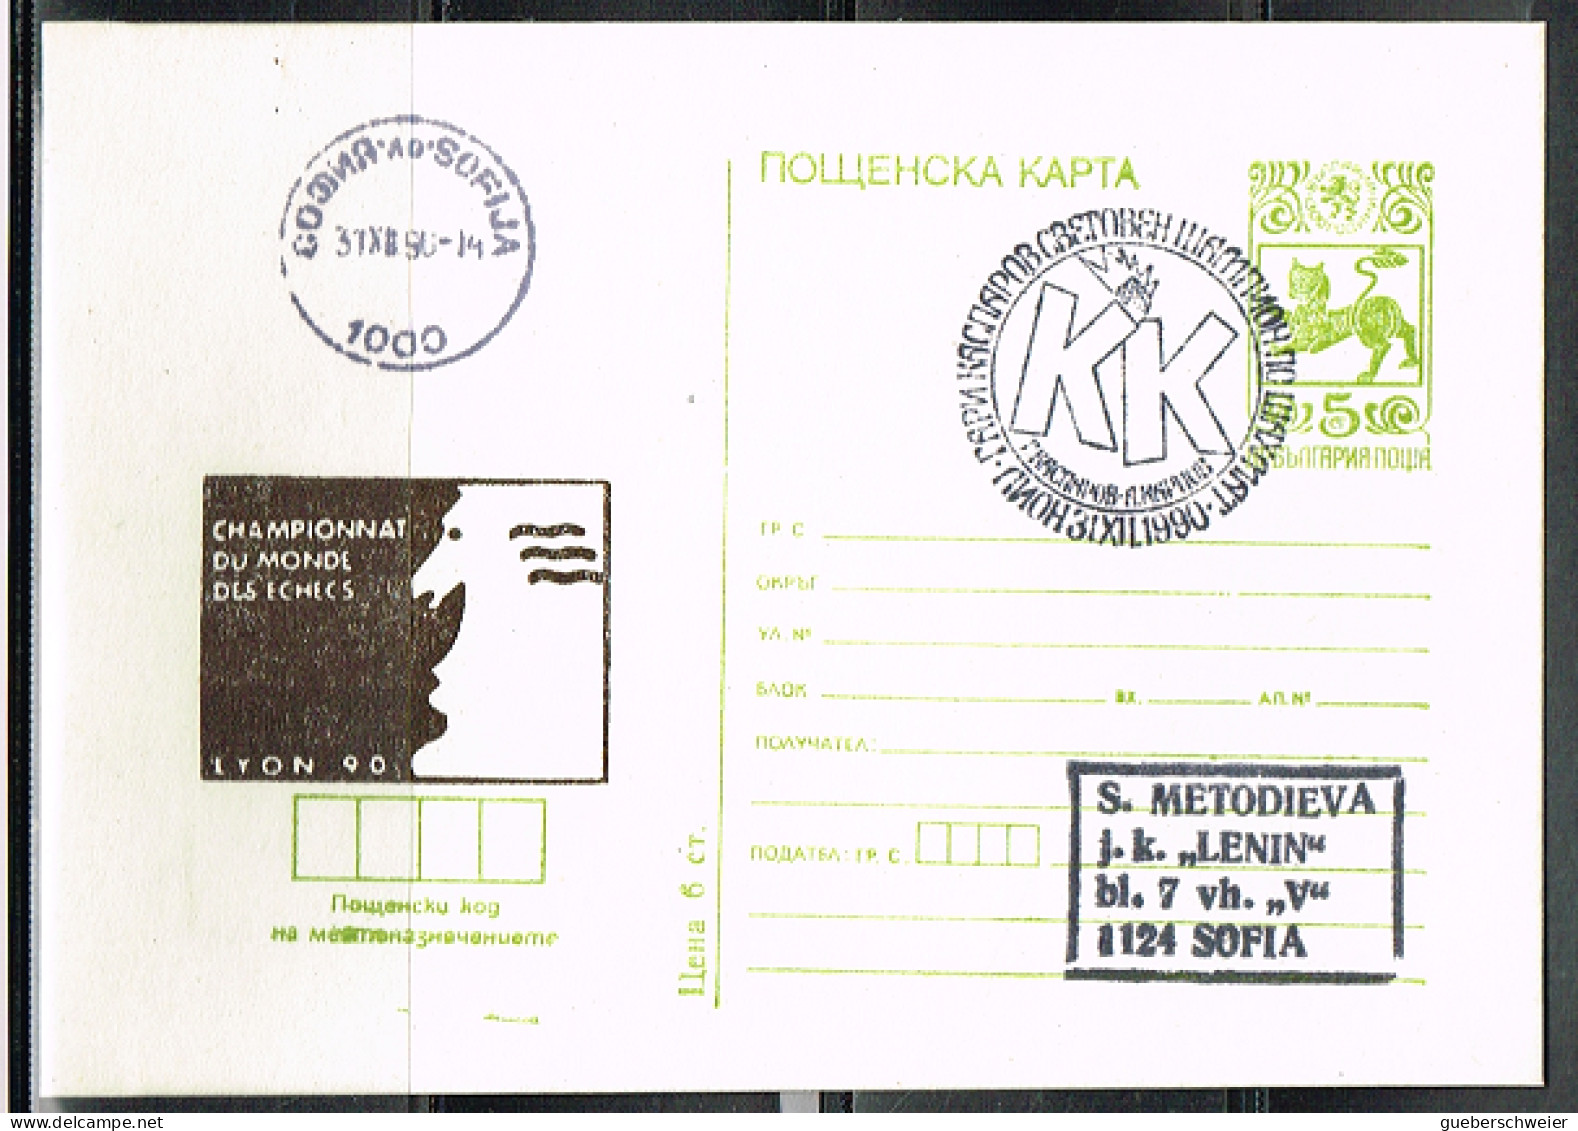 ECH L 25 - BULGARIE Entier Postal Illustré Championnat Du Monde D'Echecs  Lyon 1990 - Postkaarten